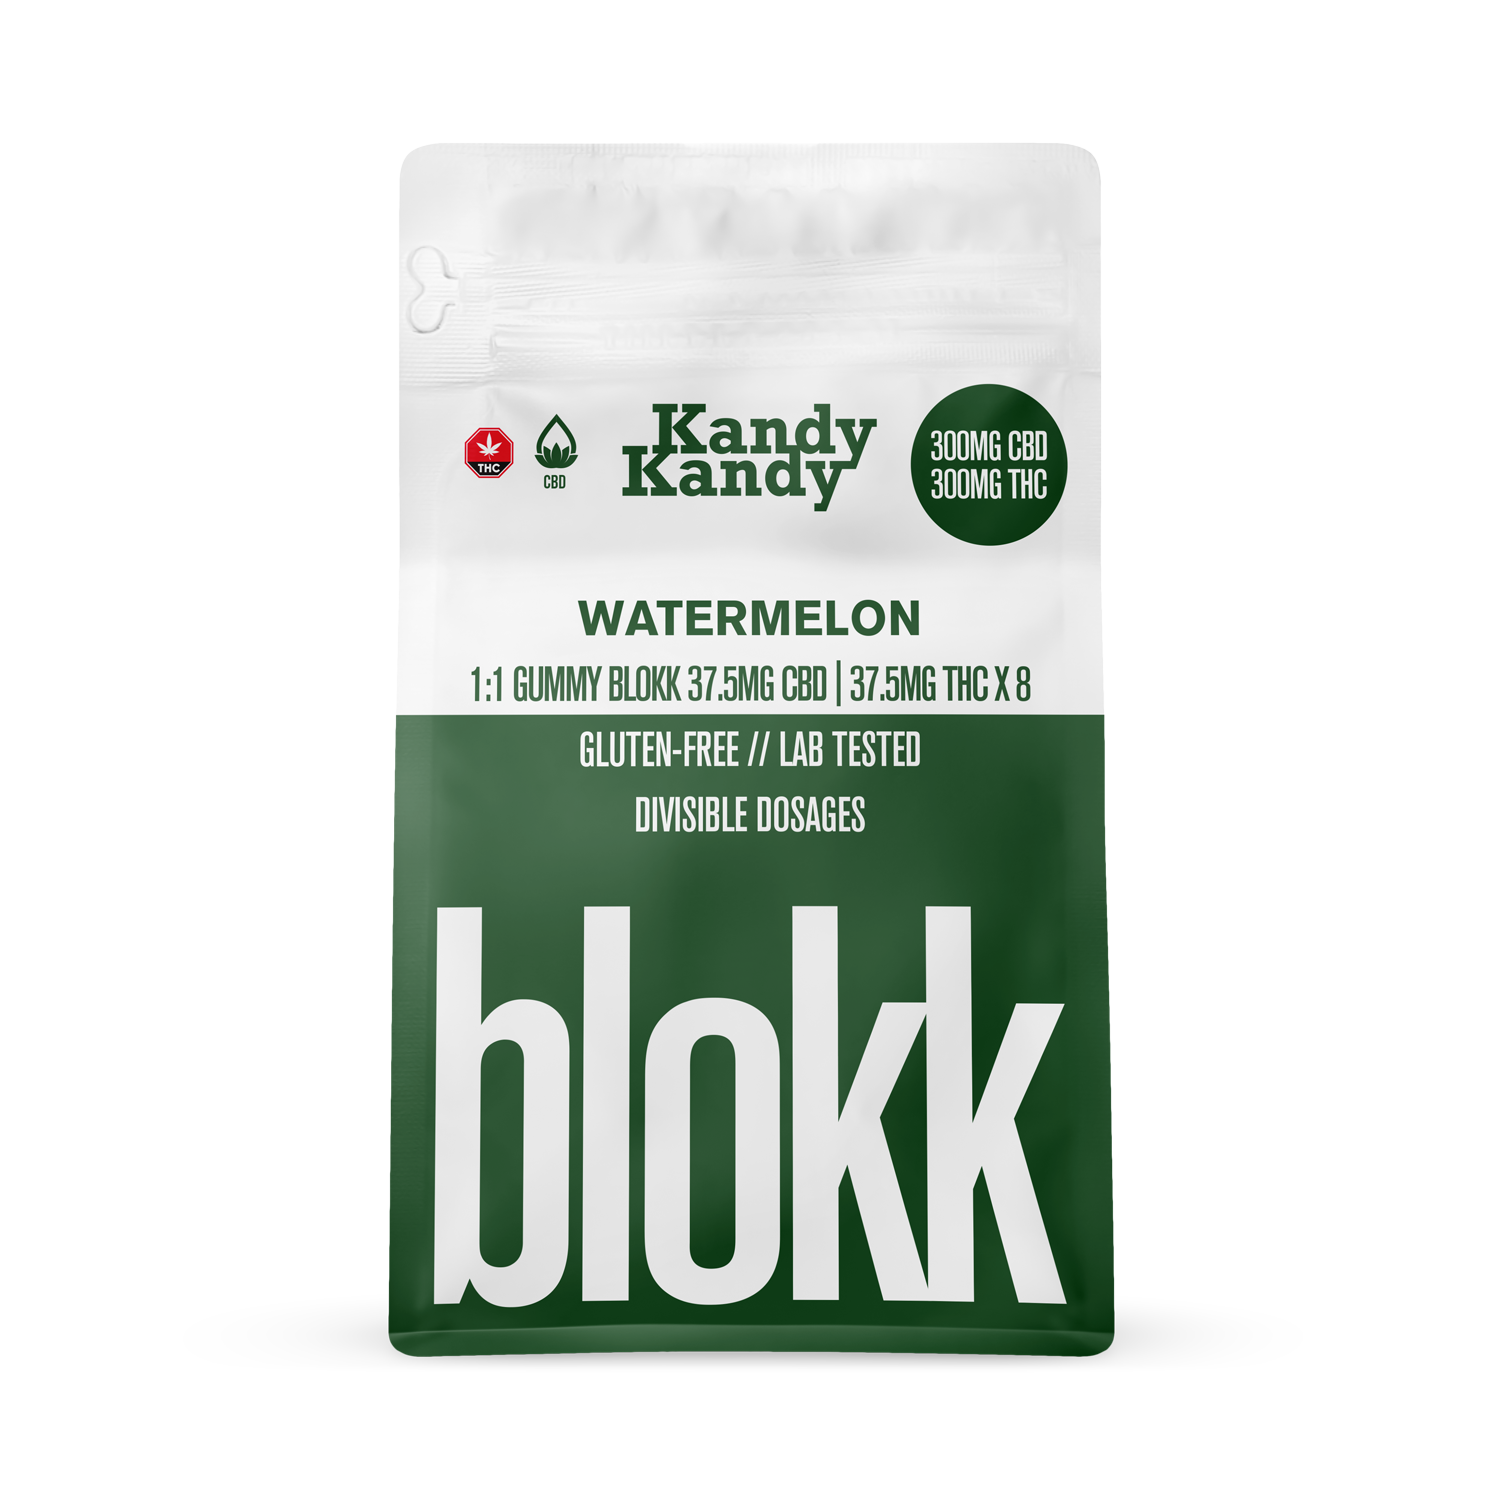 KANDY KANDY - BLOKK 1:1 GUMMIES - 300MG CBD/ 300MG THC